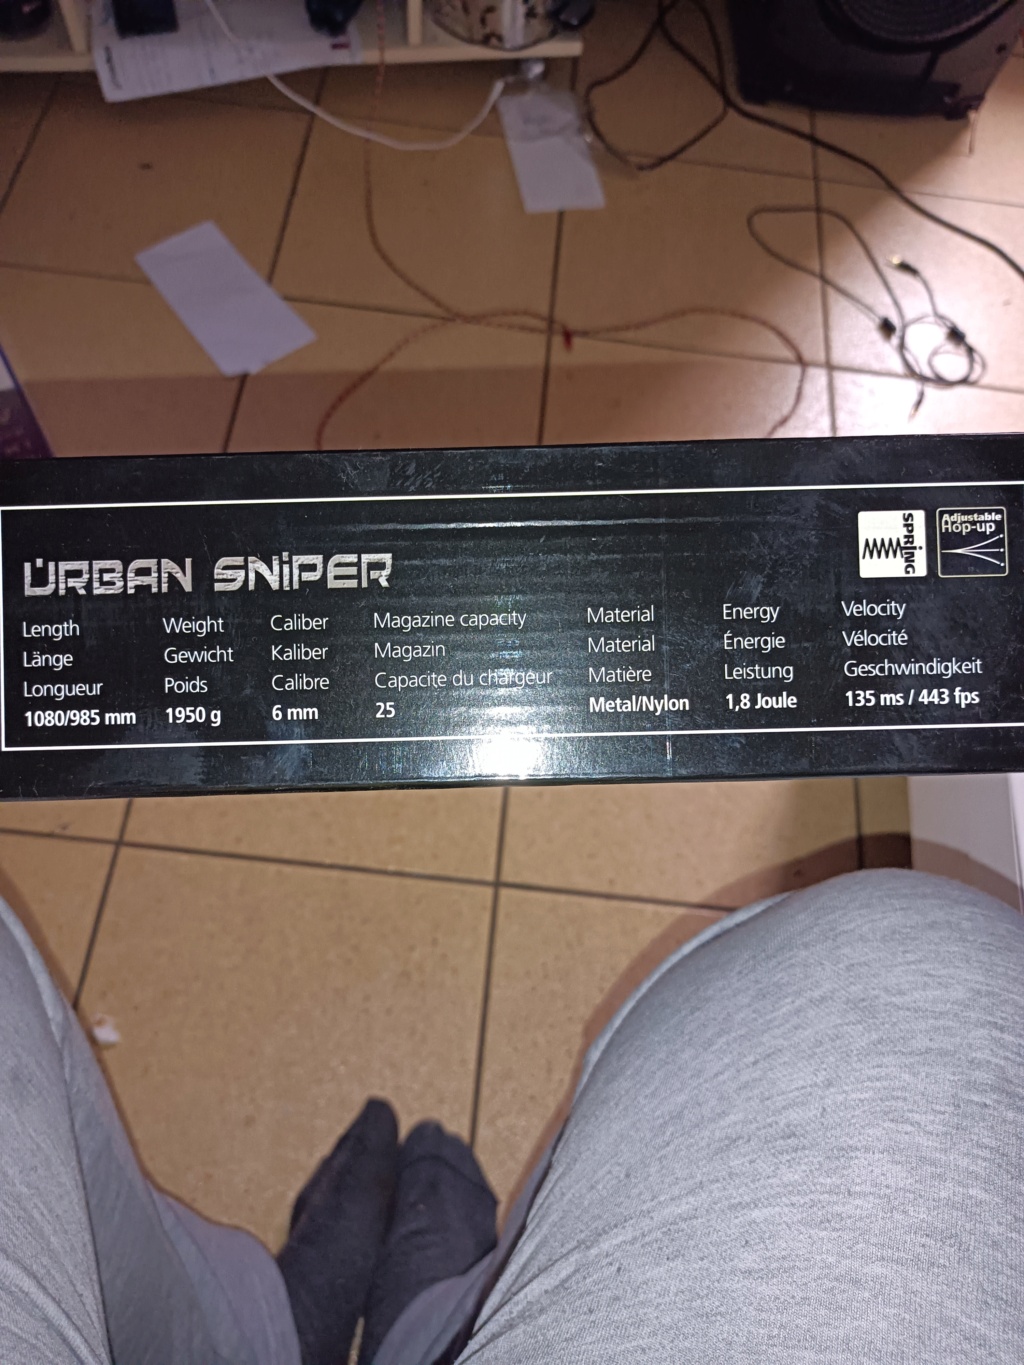 Urban sniper Img20214